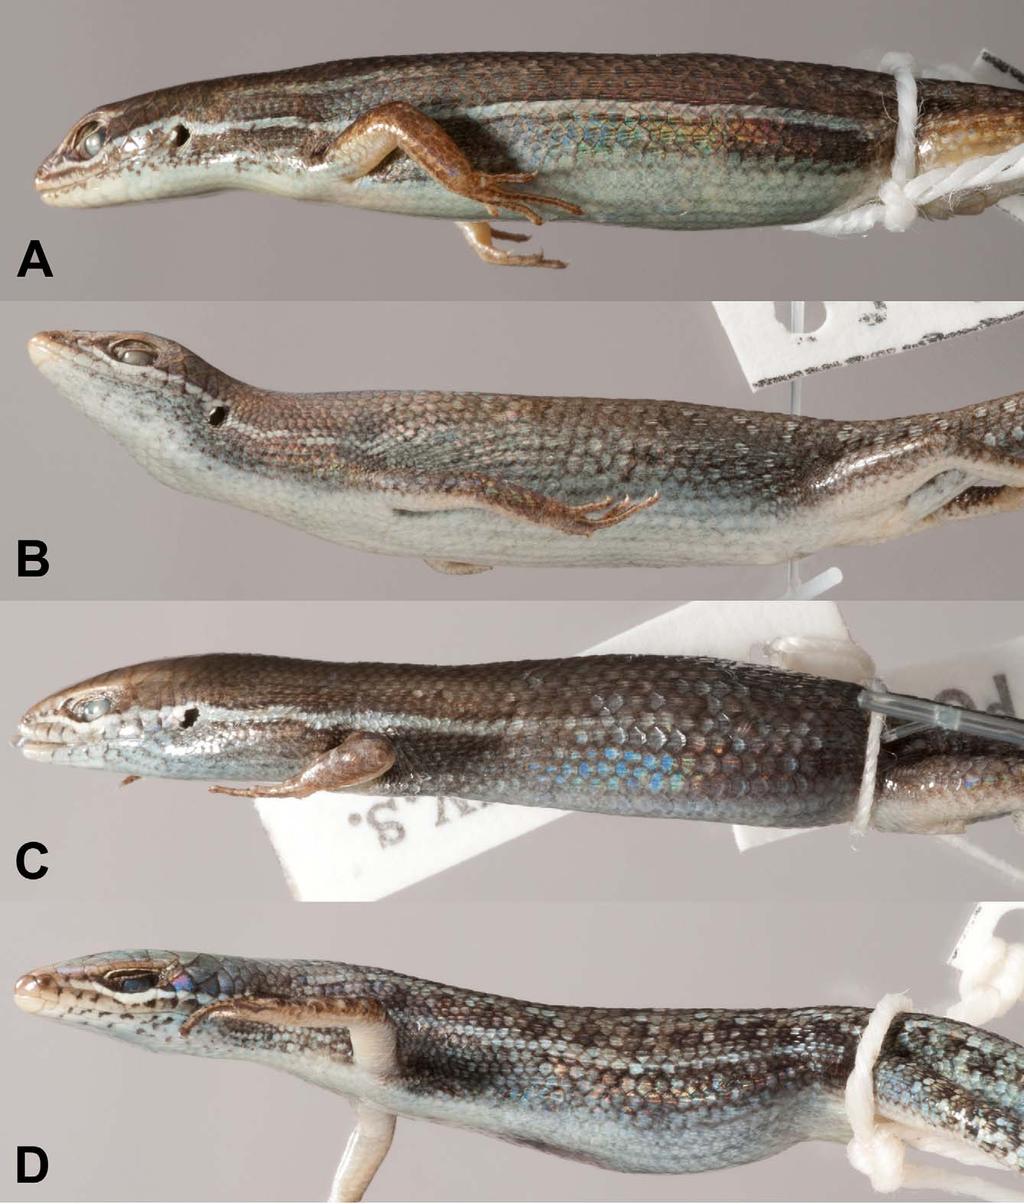 FIGURE 6. Comparison of typical lateral pattern of females: (A) C. decora sp. nov., QMJ74805, Cape Hillsborough; (B) C. rubigo sp. nov., QMJ76658, Magnetic Island; (C) C.